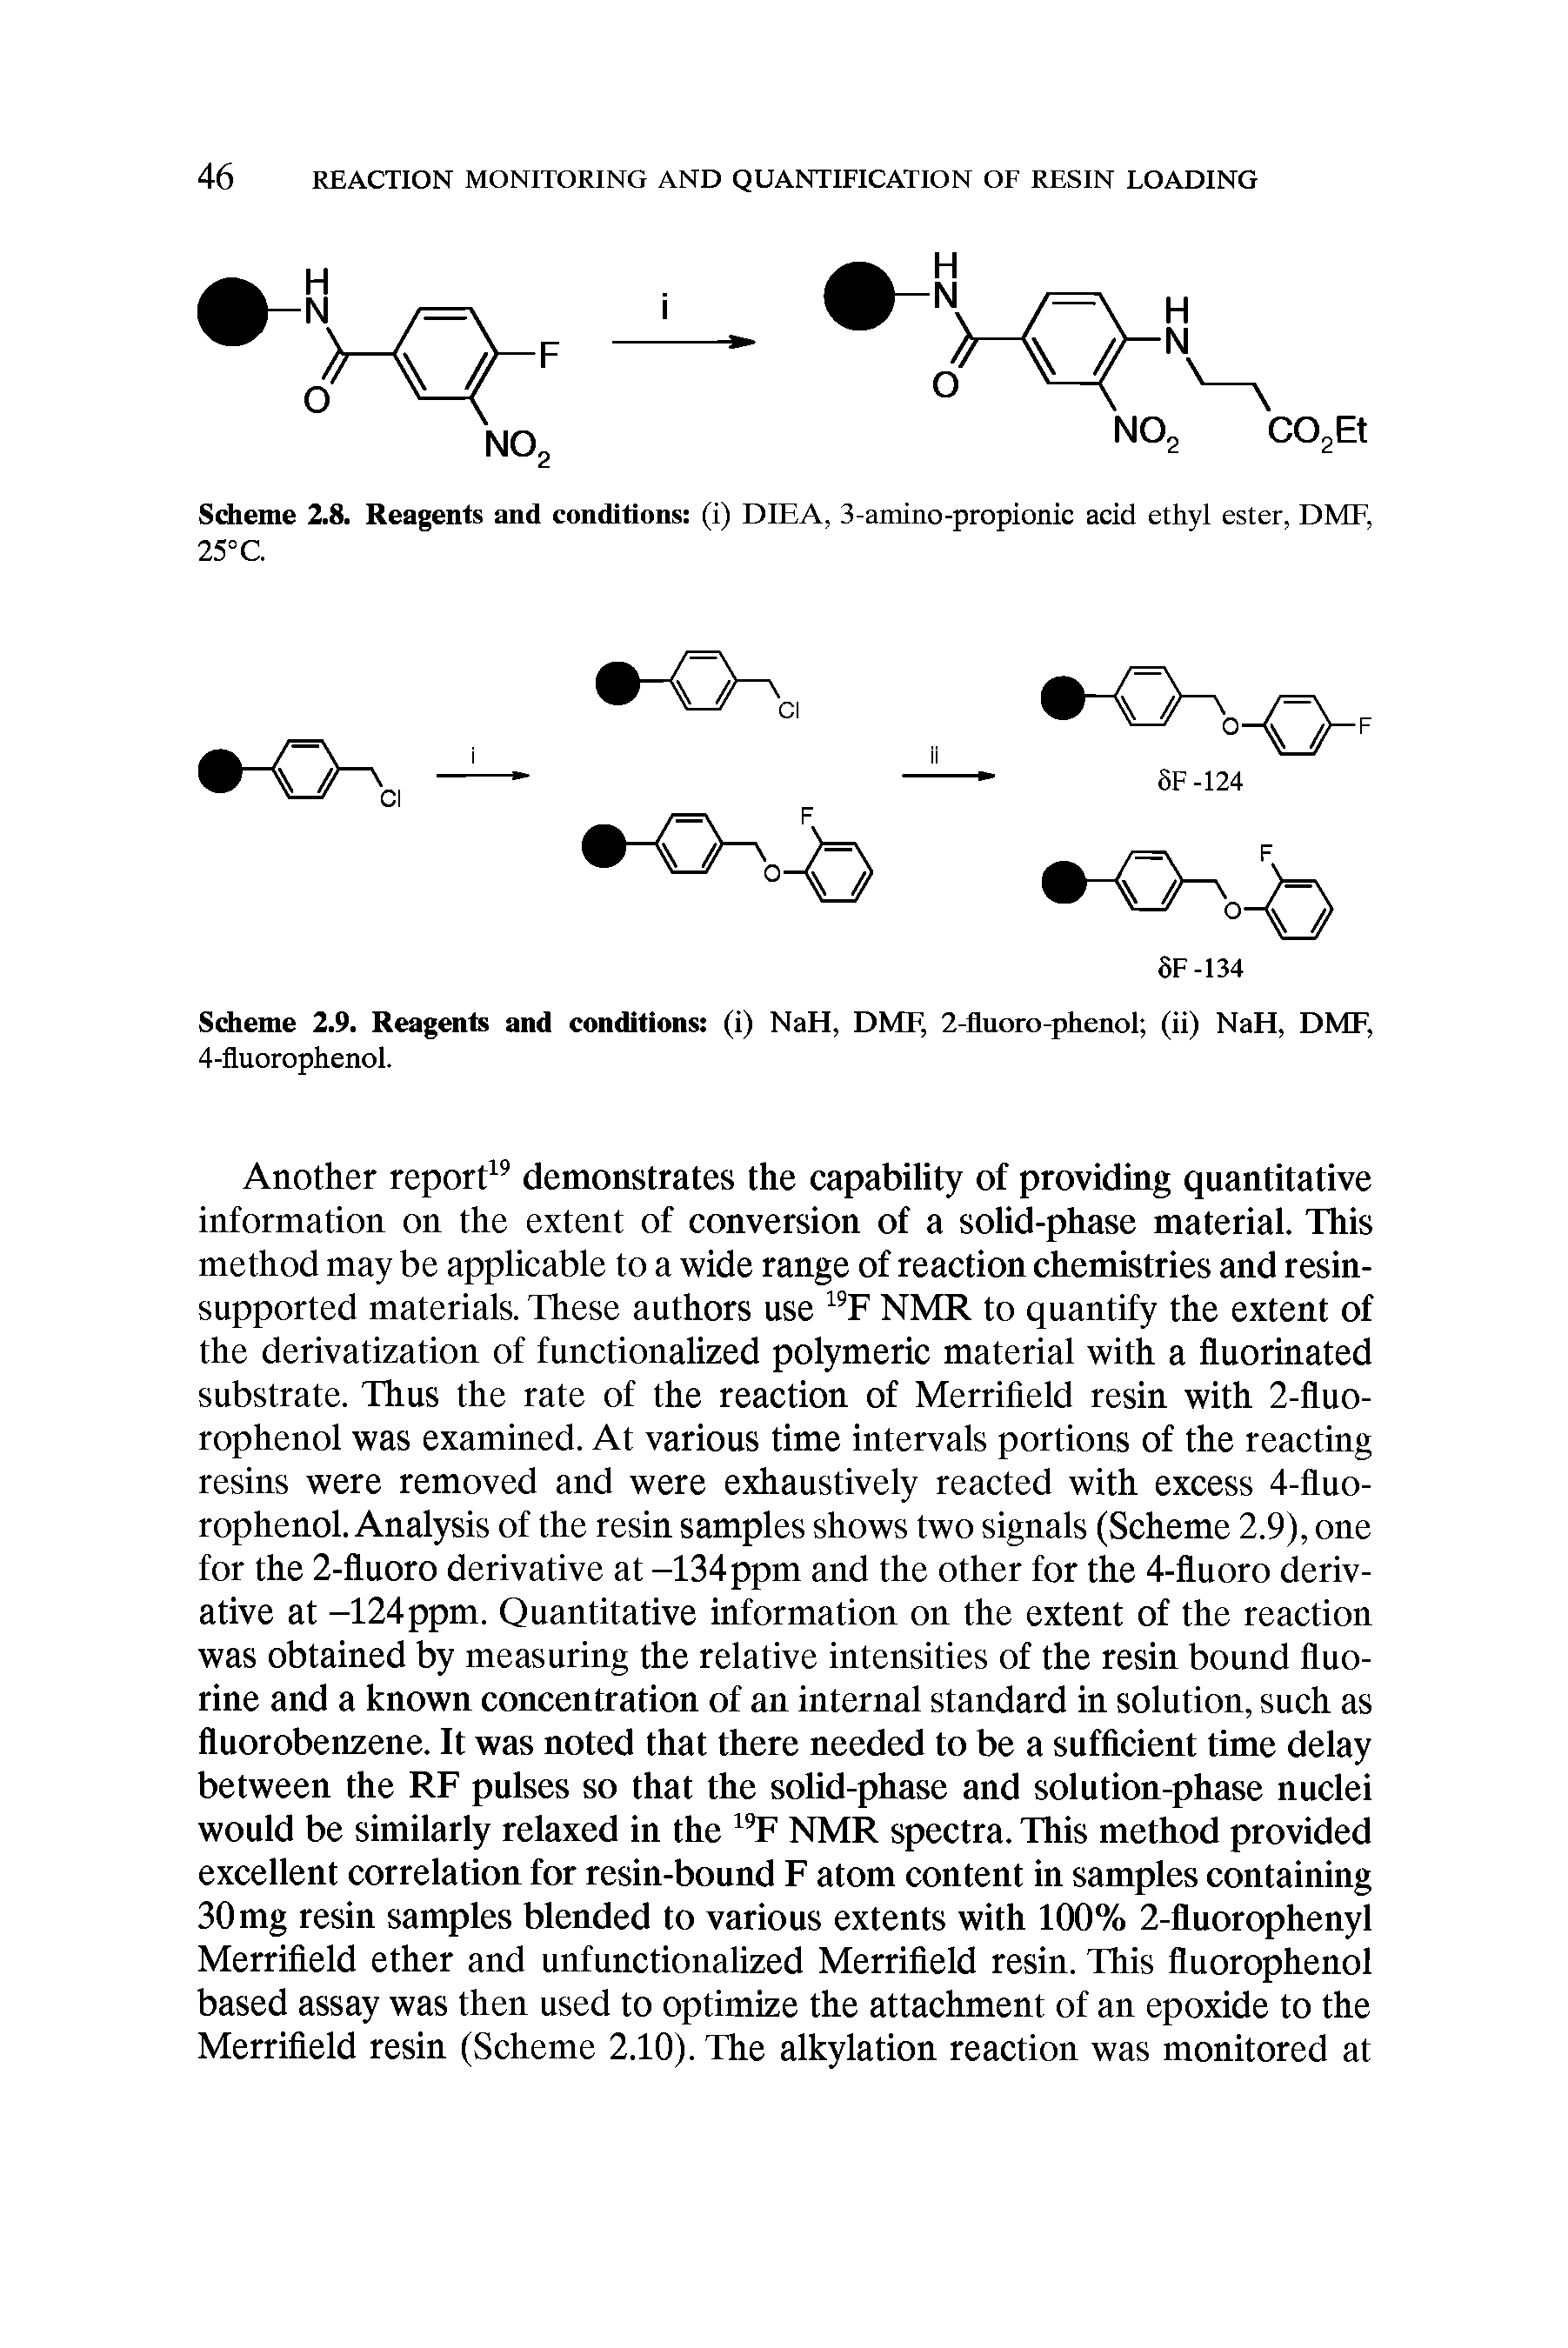 Scheme 2.8. Reagents and conditions (i) DIEA, 3-ammo-propionic acid ethyl ester, DMF, 25° C.